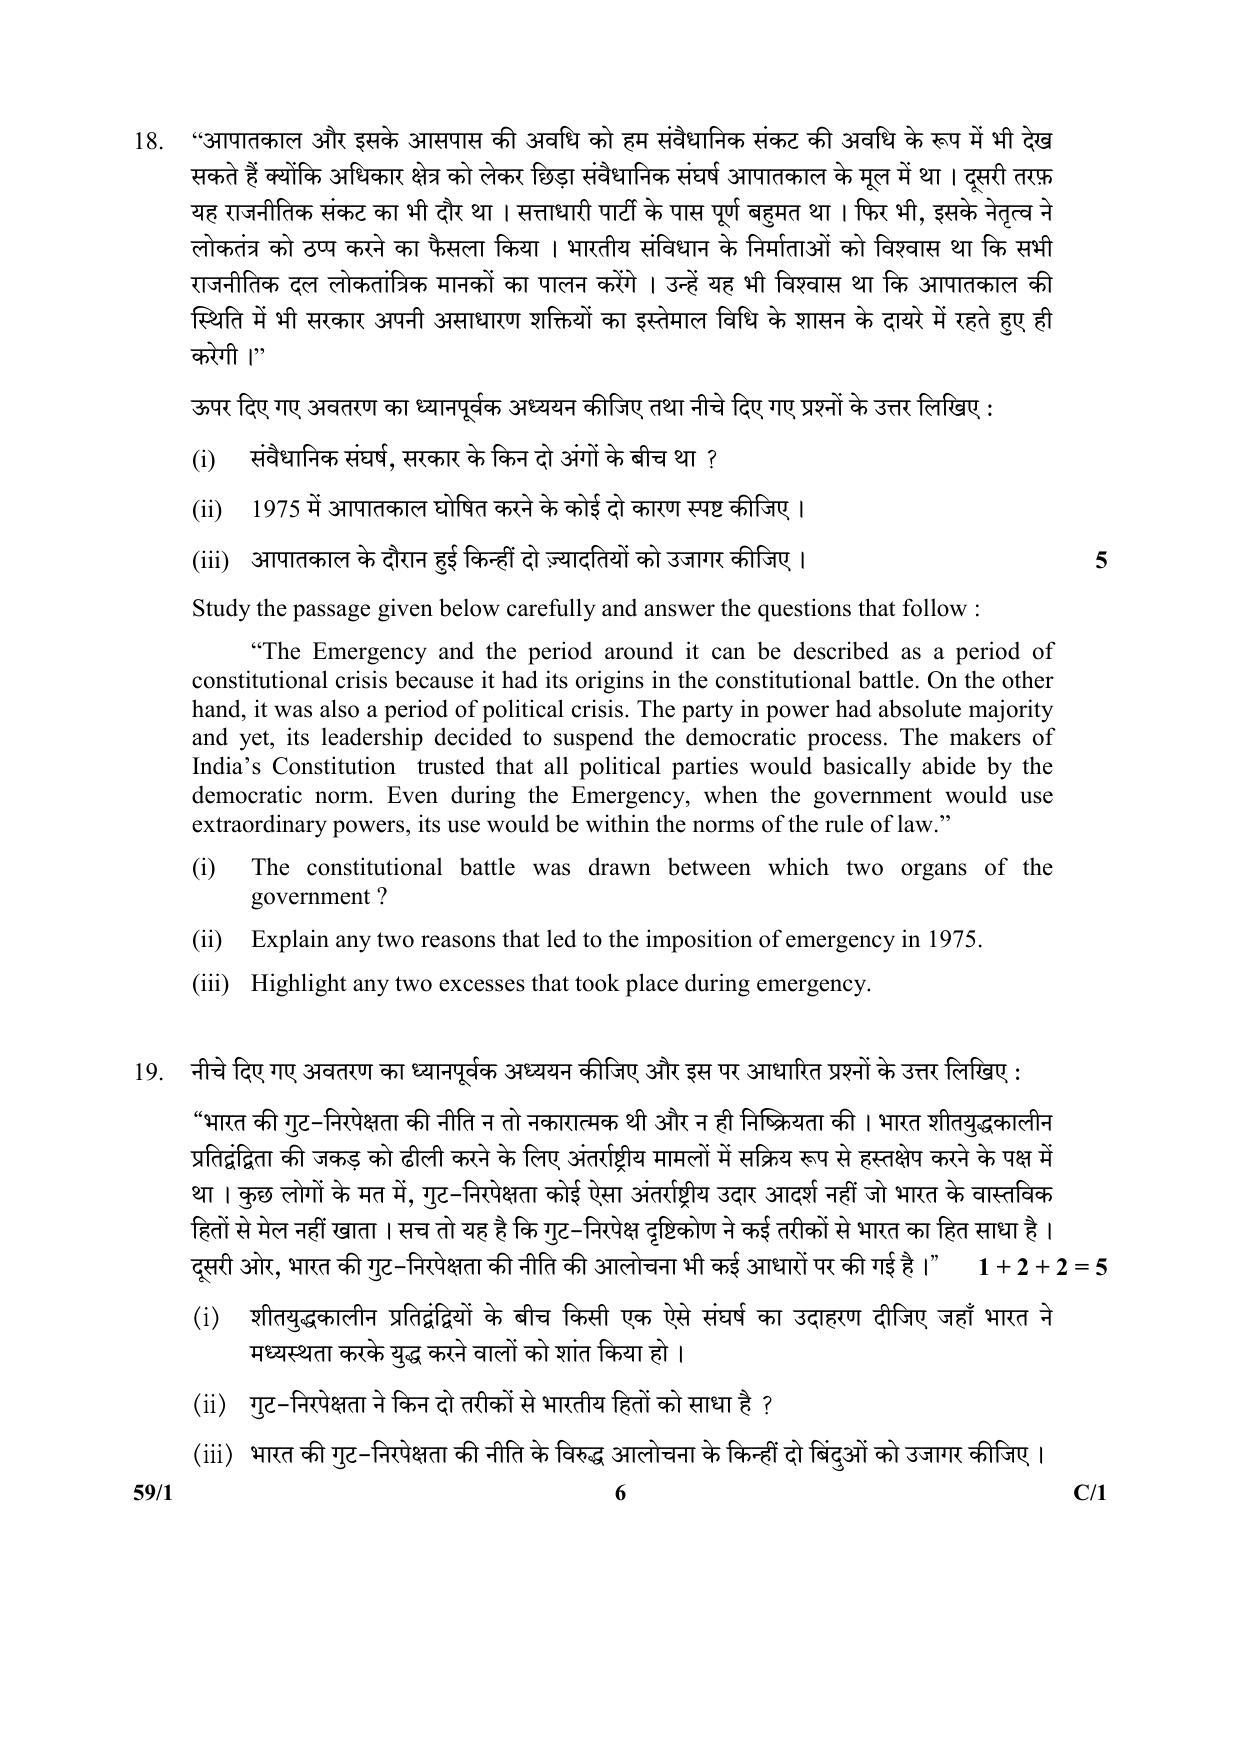 CBSE Class 12 221-1 Political Science_Punjabi 2018 Compartment Question Paper - Page 14